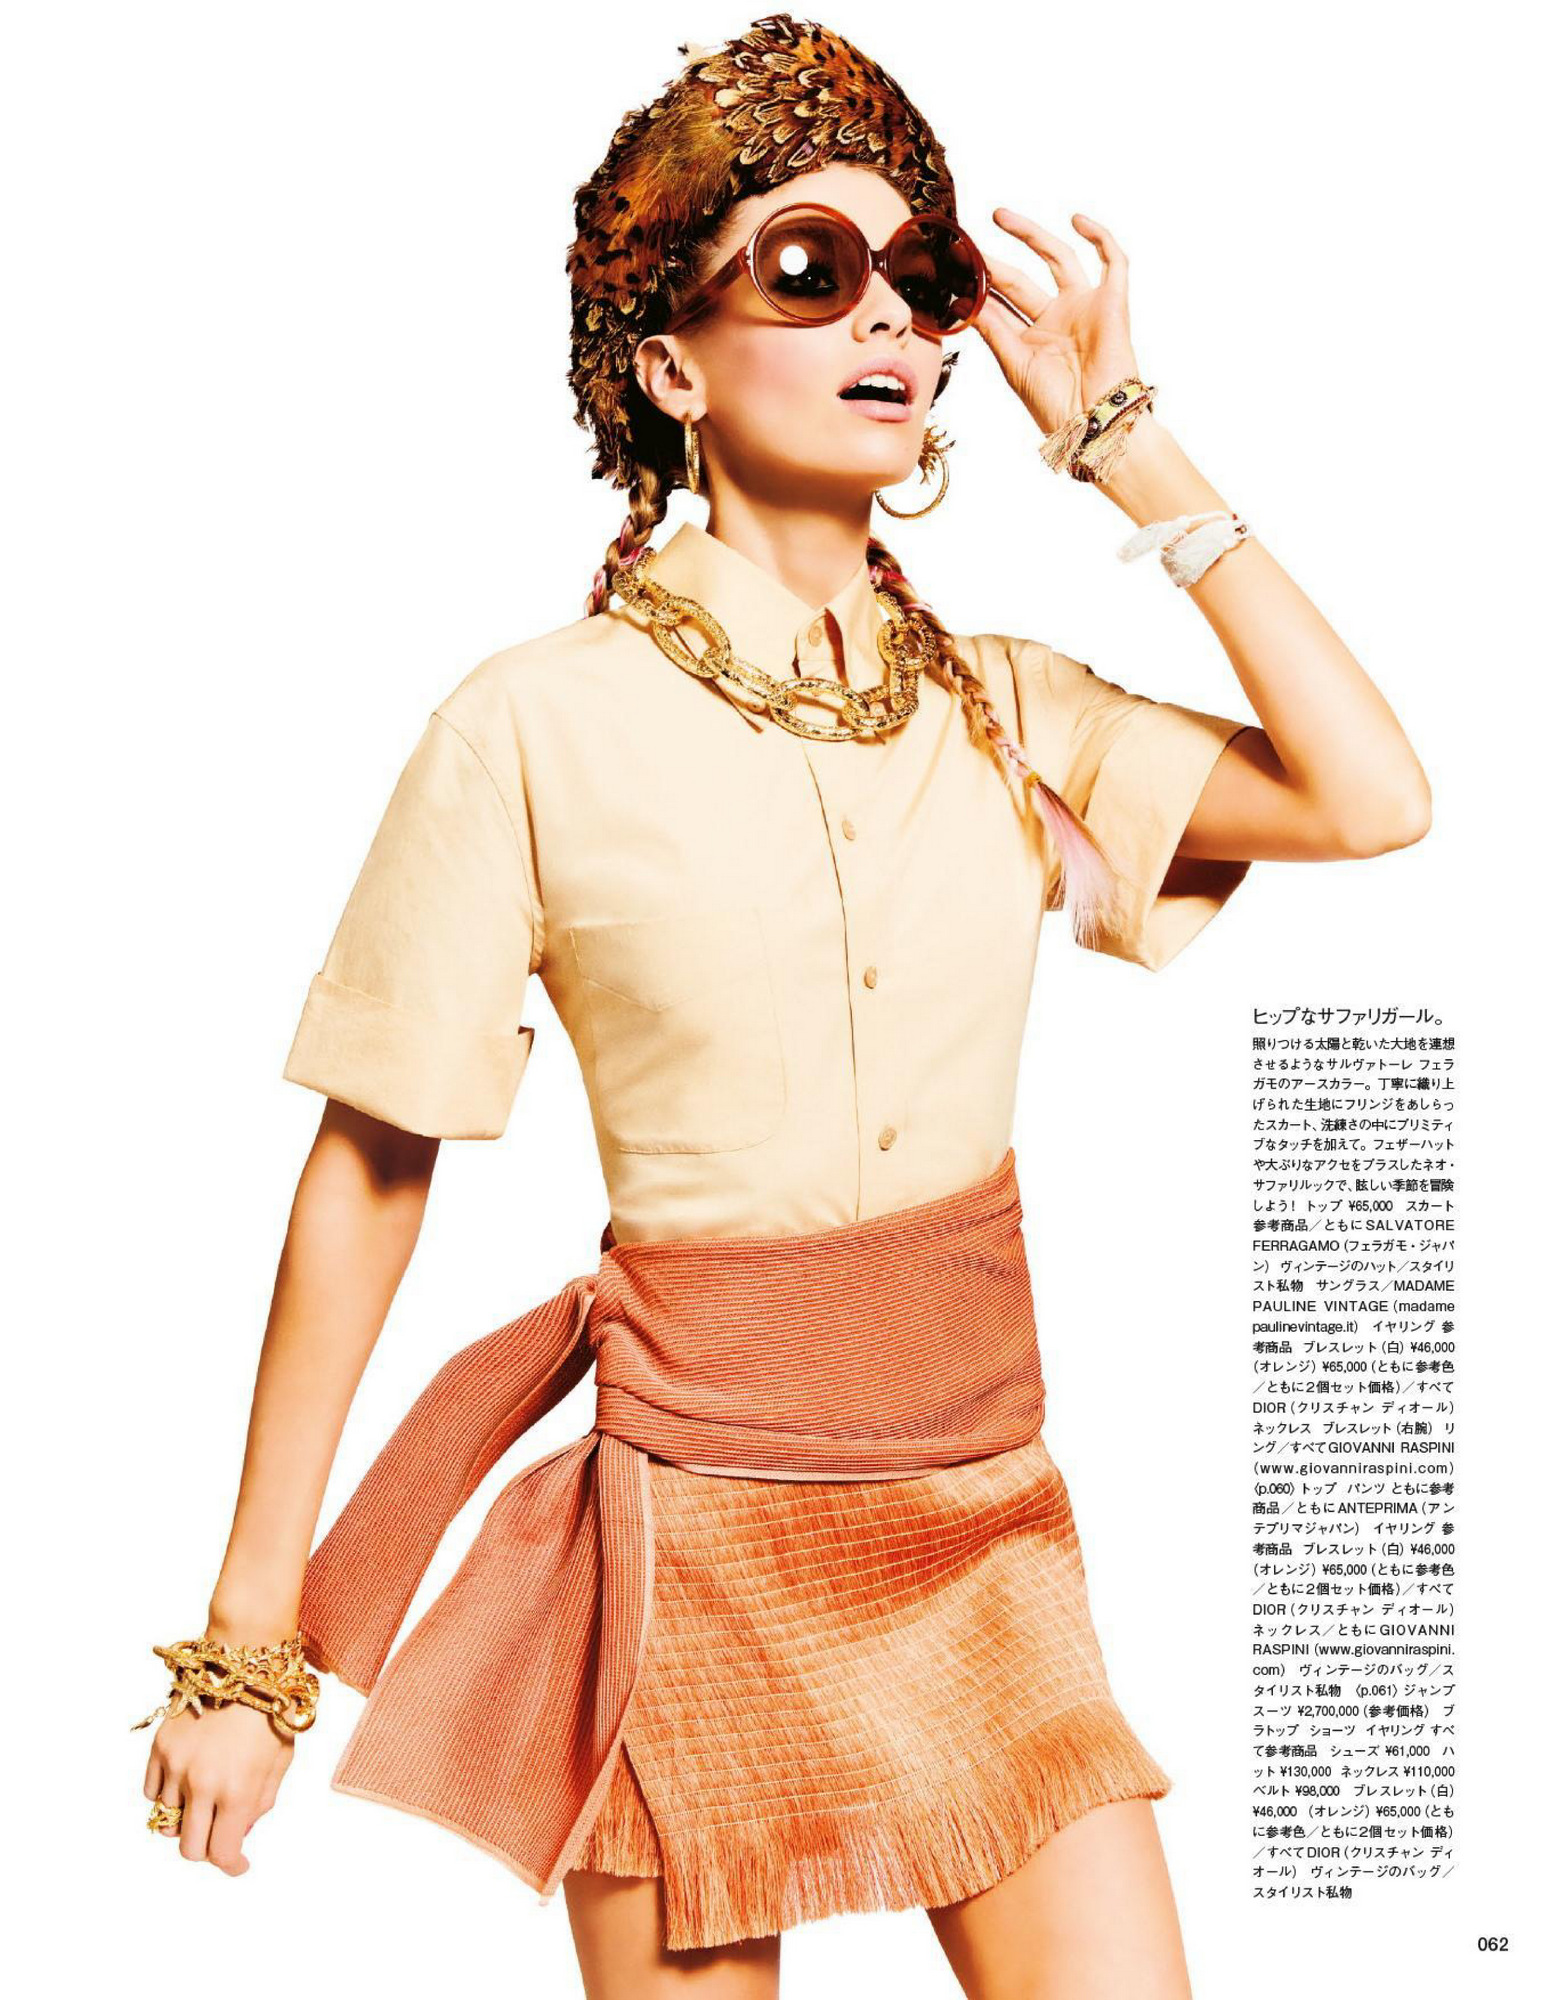 Stella Maxwell Beachin' it For Vogue! - Photo 15